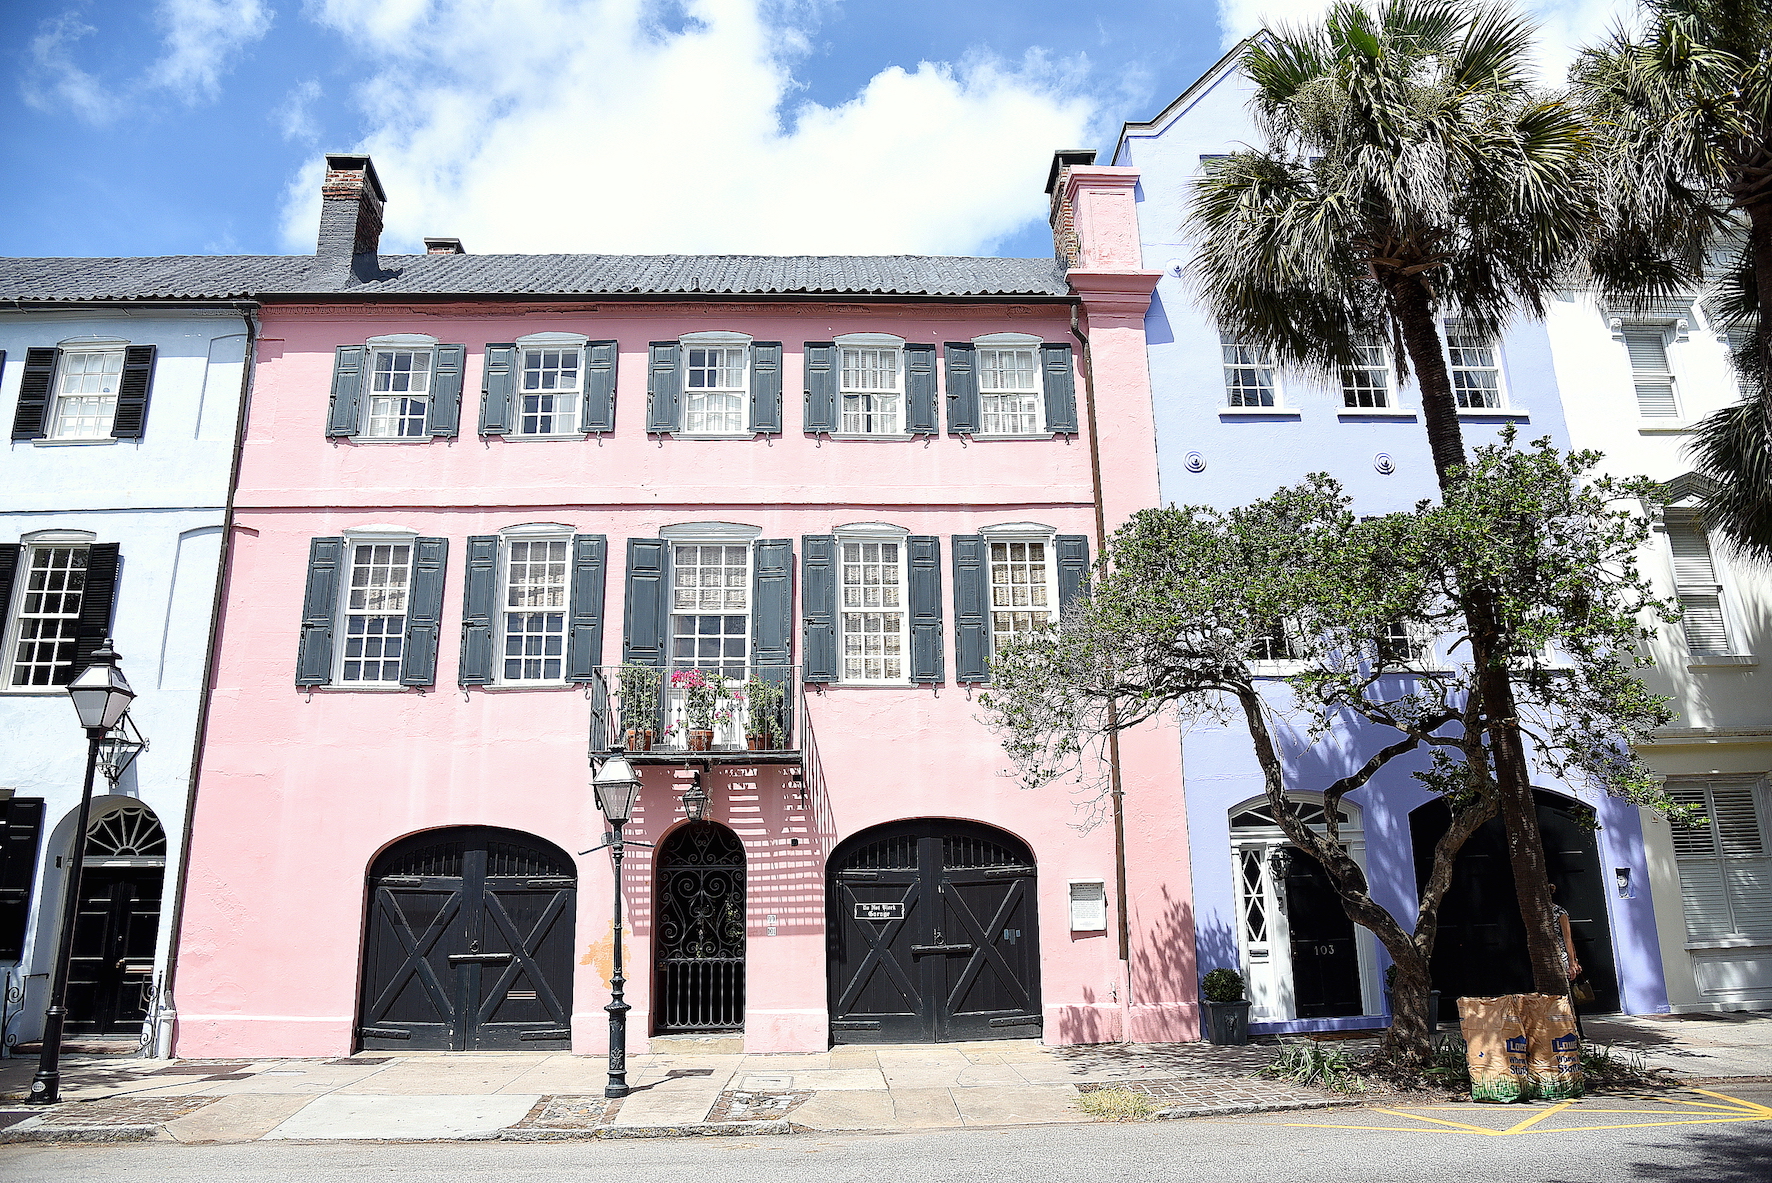 The magnificent rainbow row houses of Charleston, South Carolina